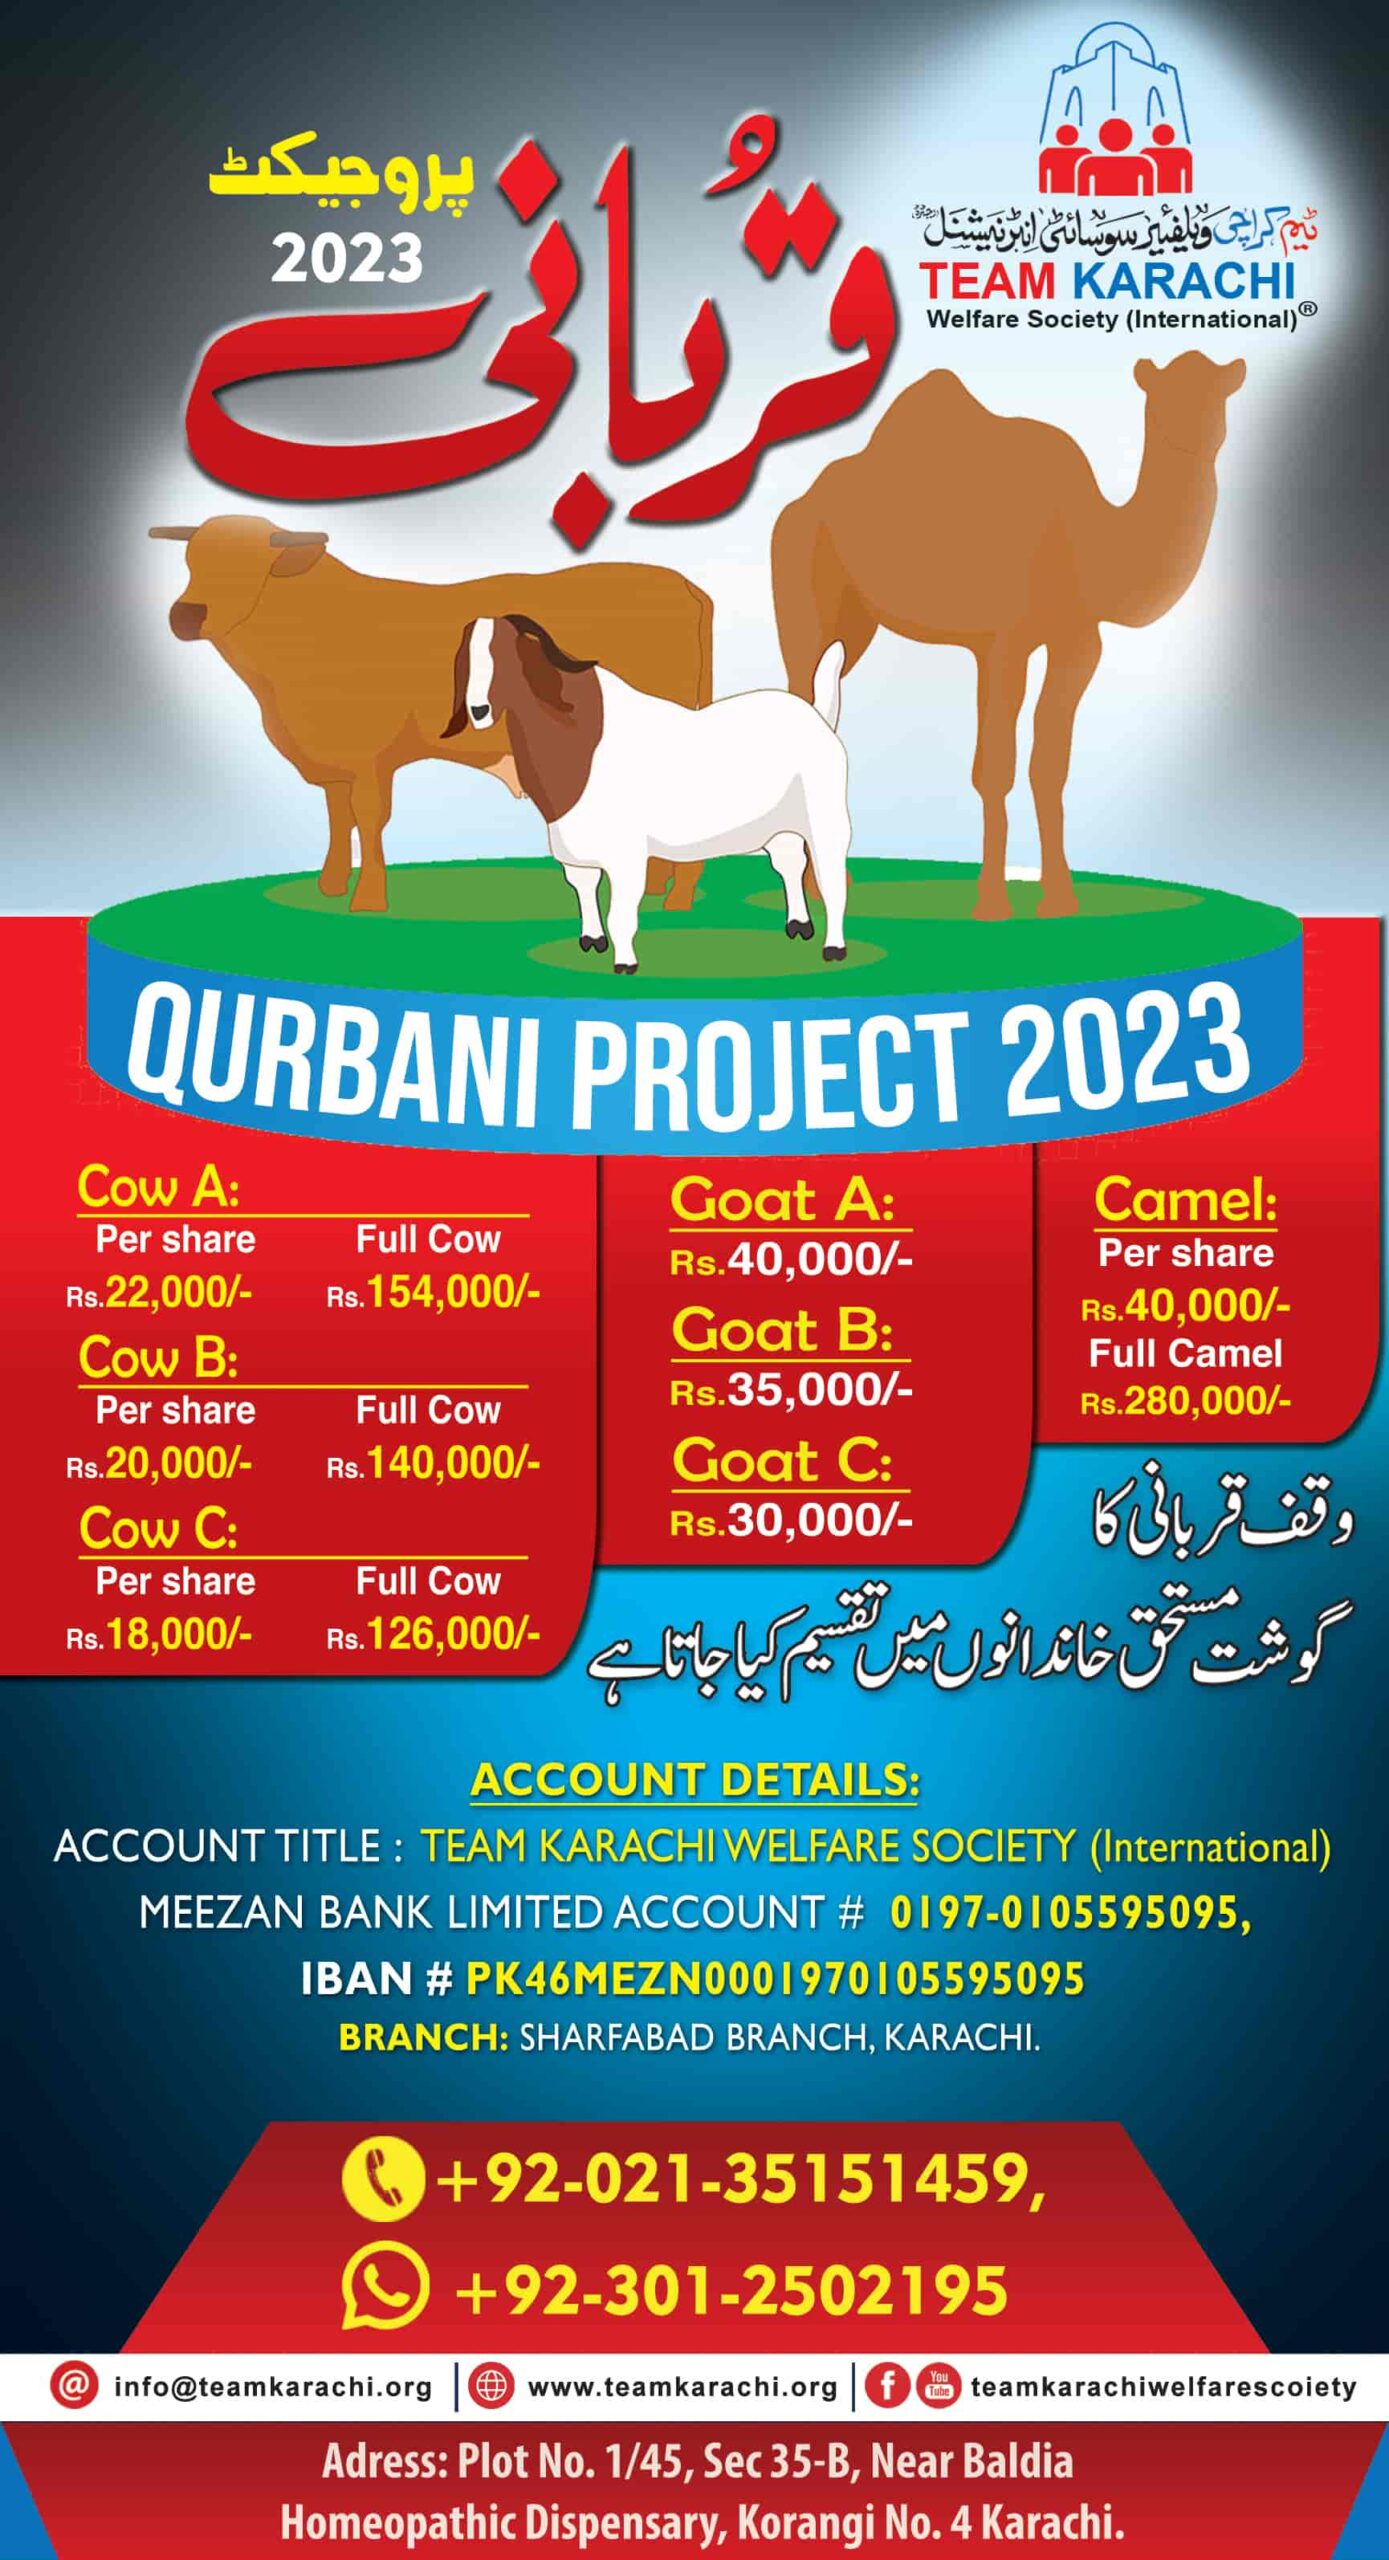 Qurbani Project 2023 - Team Karachi Welfare Society - teamkarachi.org